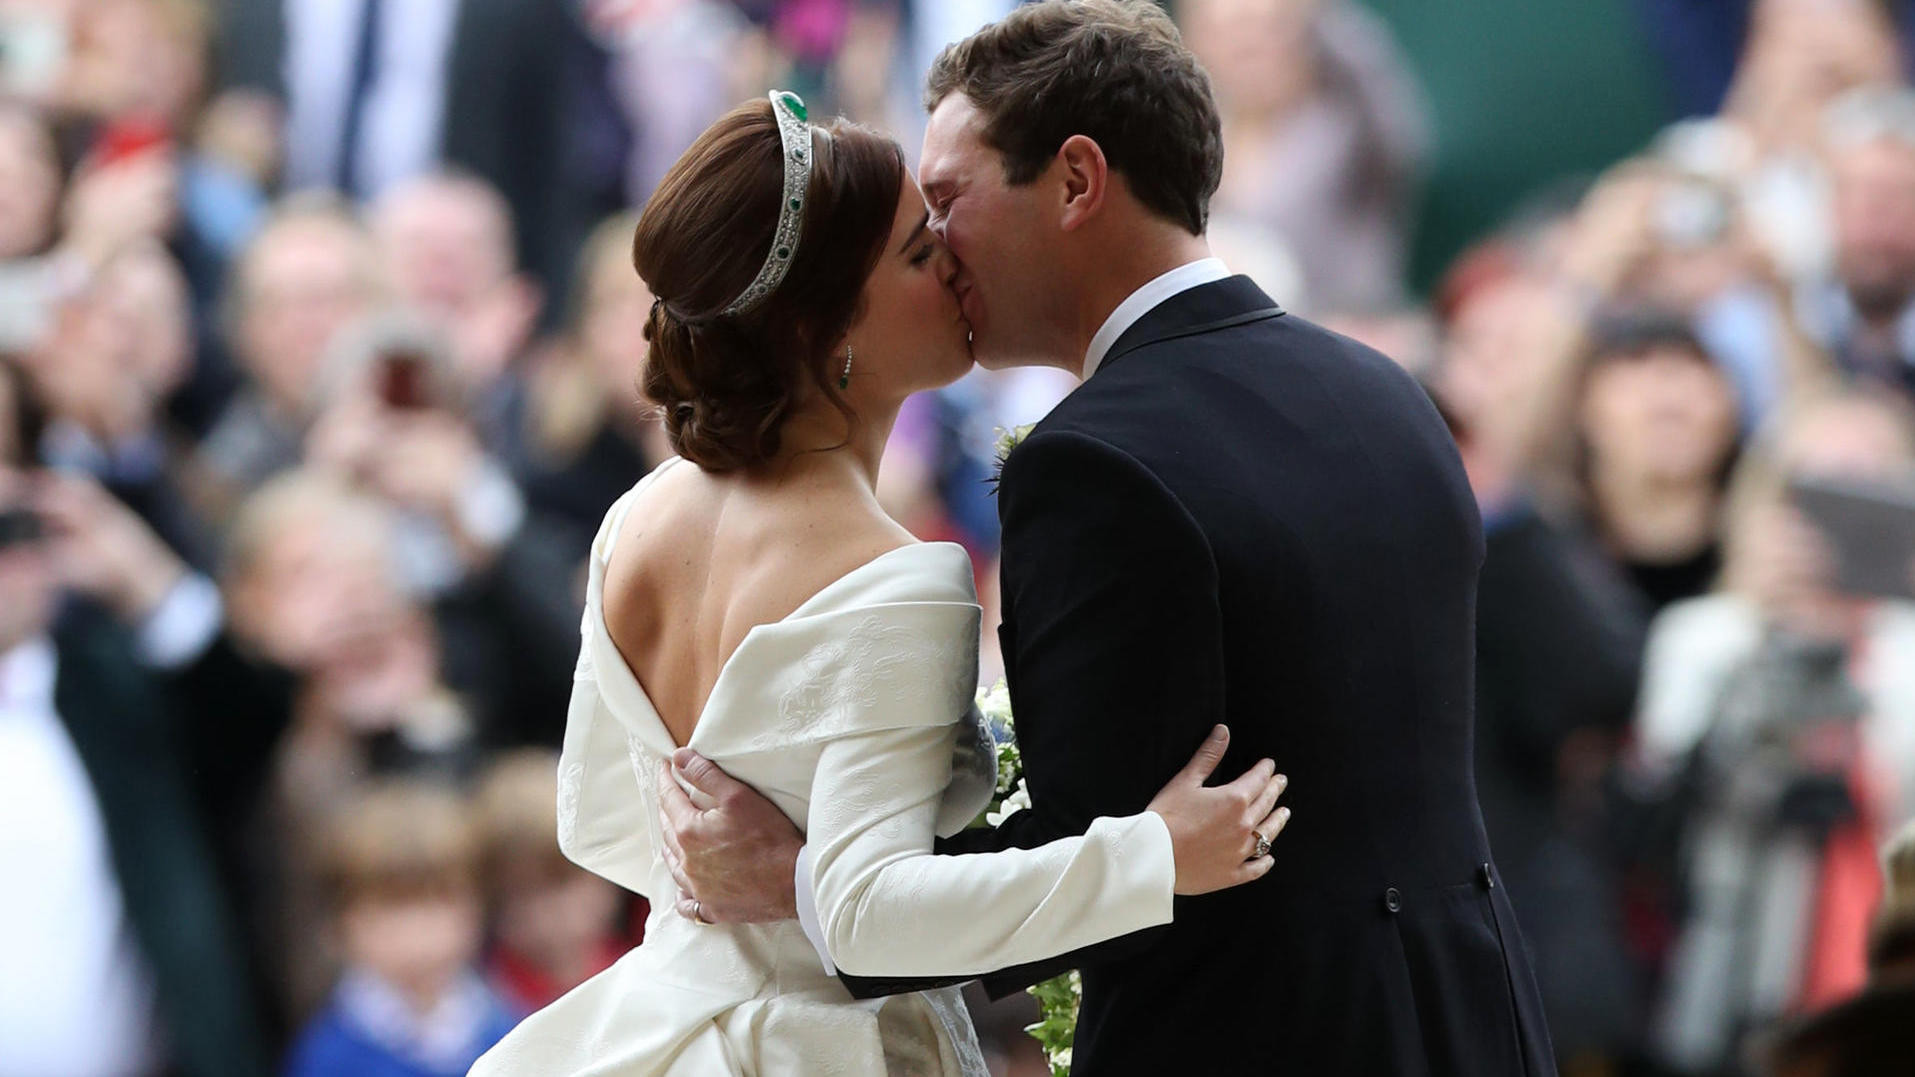 Royale Hochzeit Prinzessin Eugenie
 Royale Hochzeit Der erste Kuss von Prinzessin Eugenie und